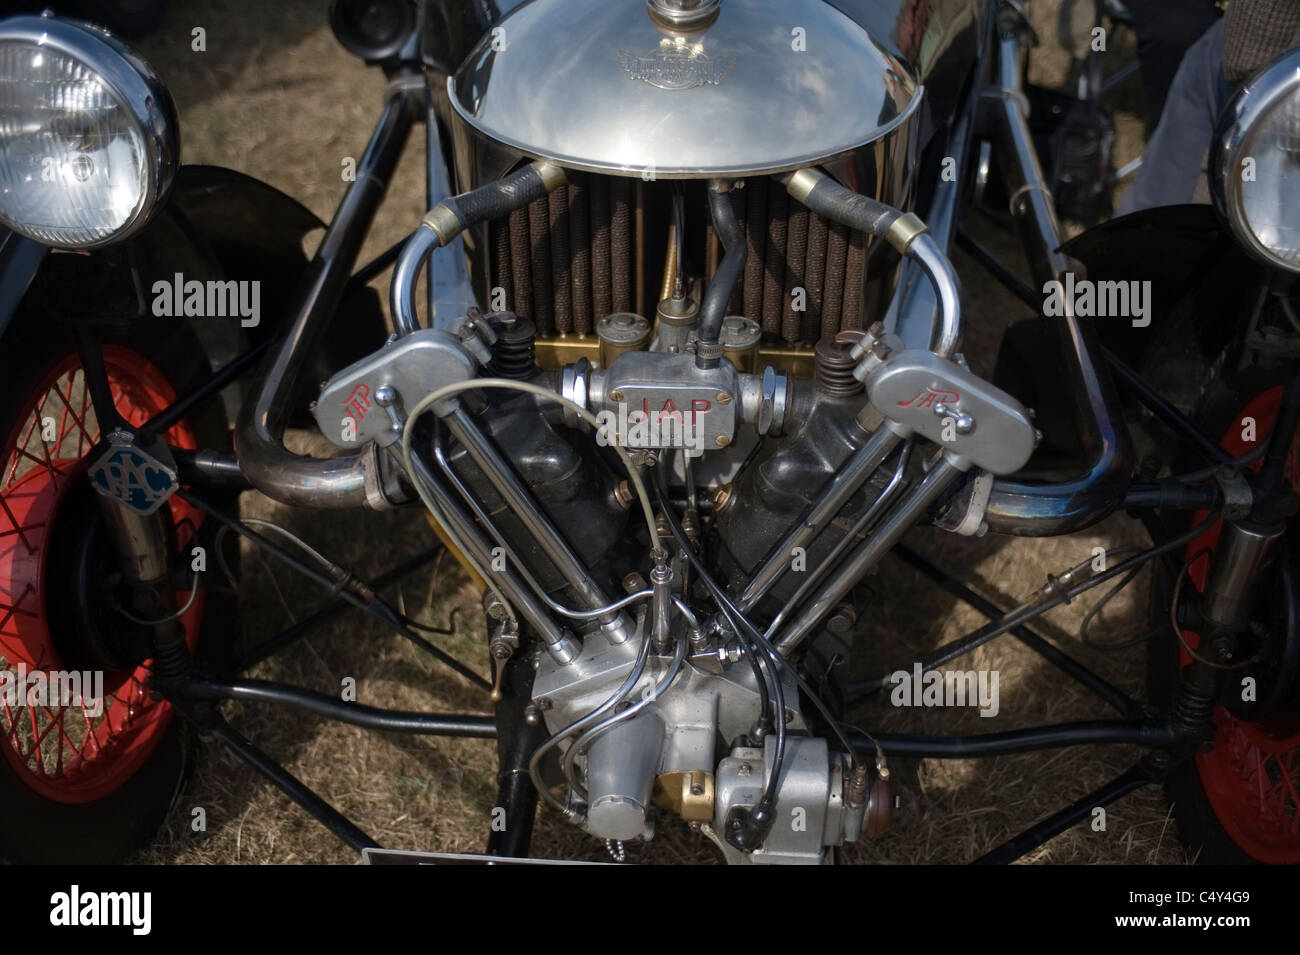 morgan trike engine Stock Photo